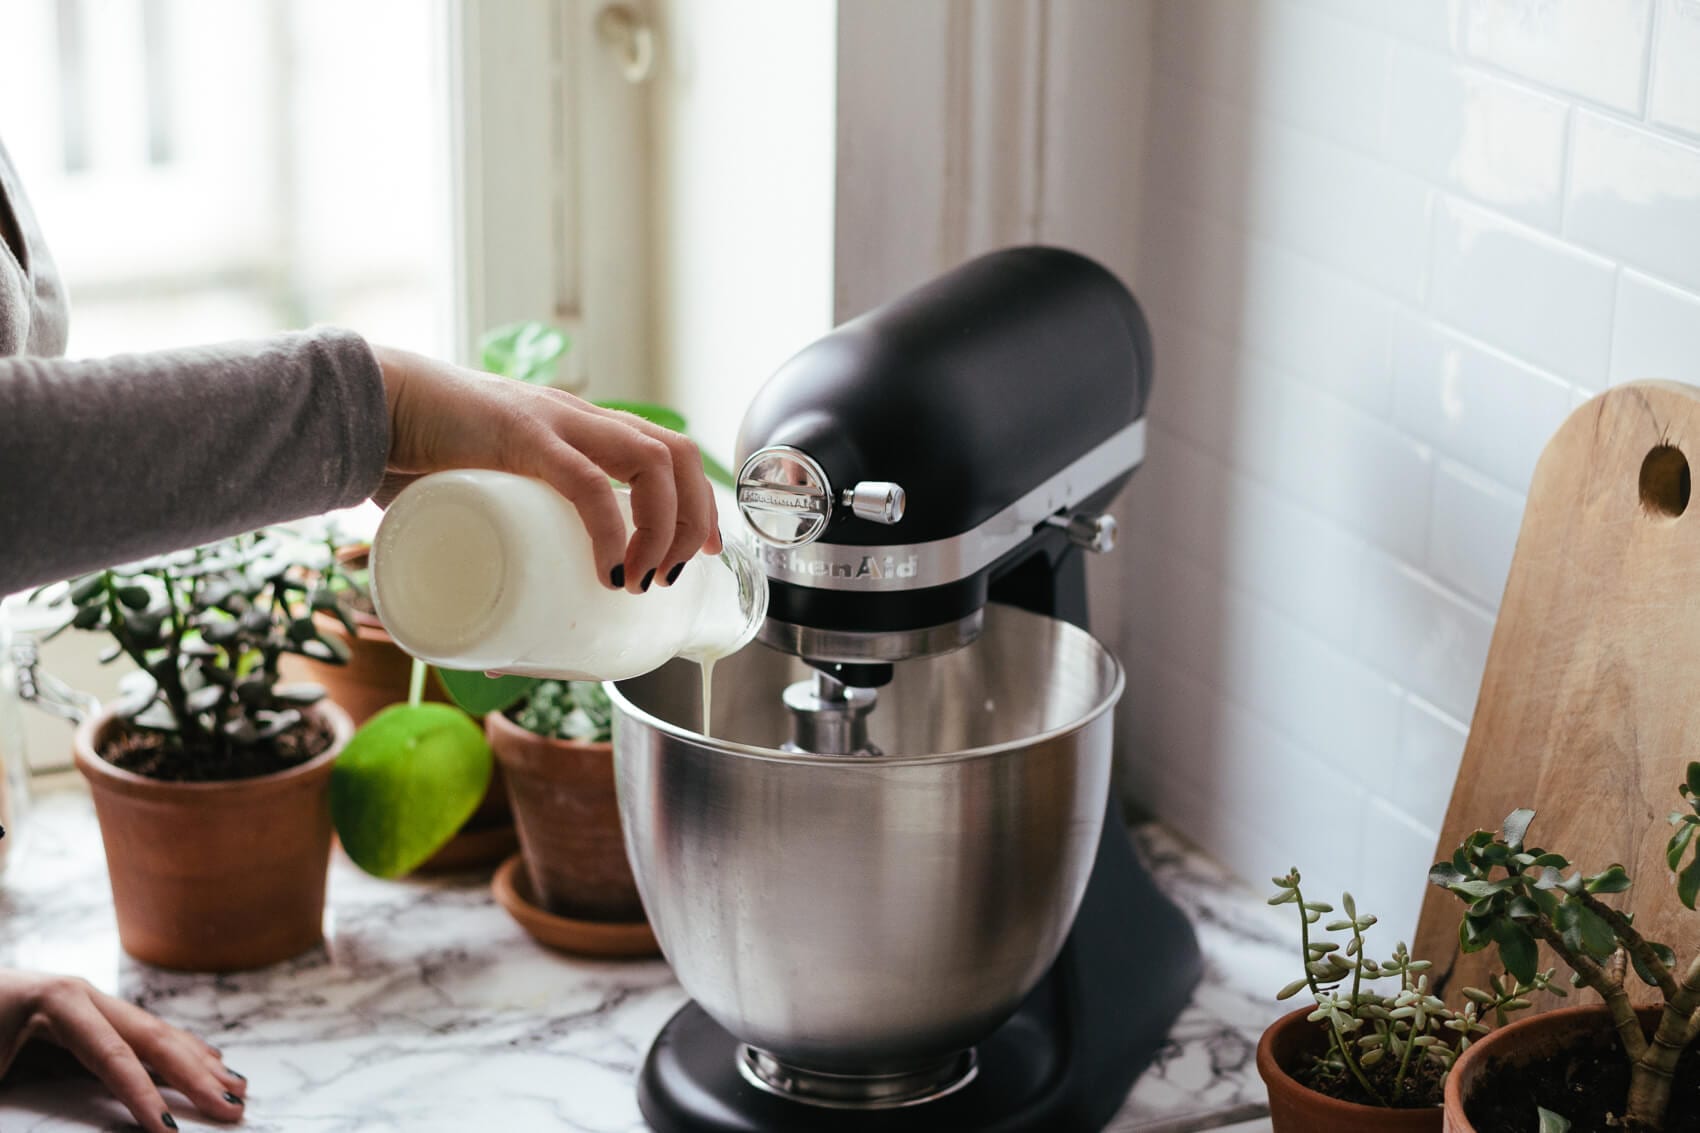 test essai complet avis Kitchenaid kitchen Aid mini mini artisan robot pâtissier 2019